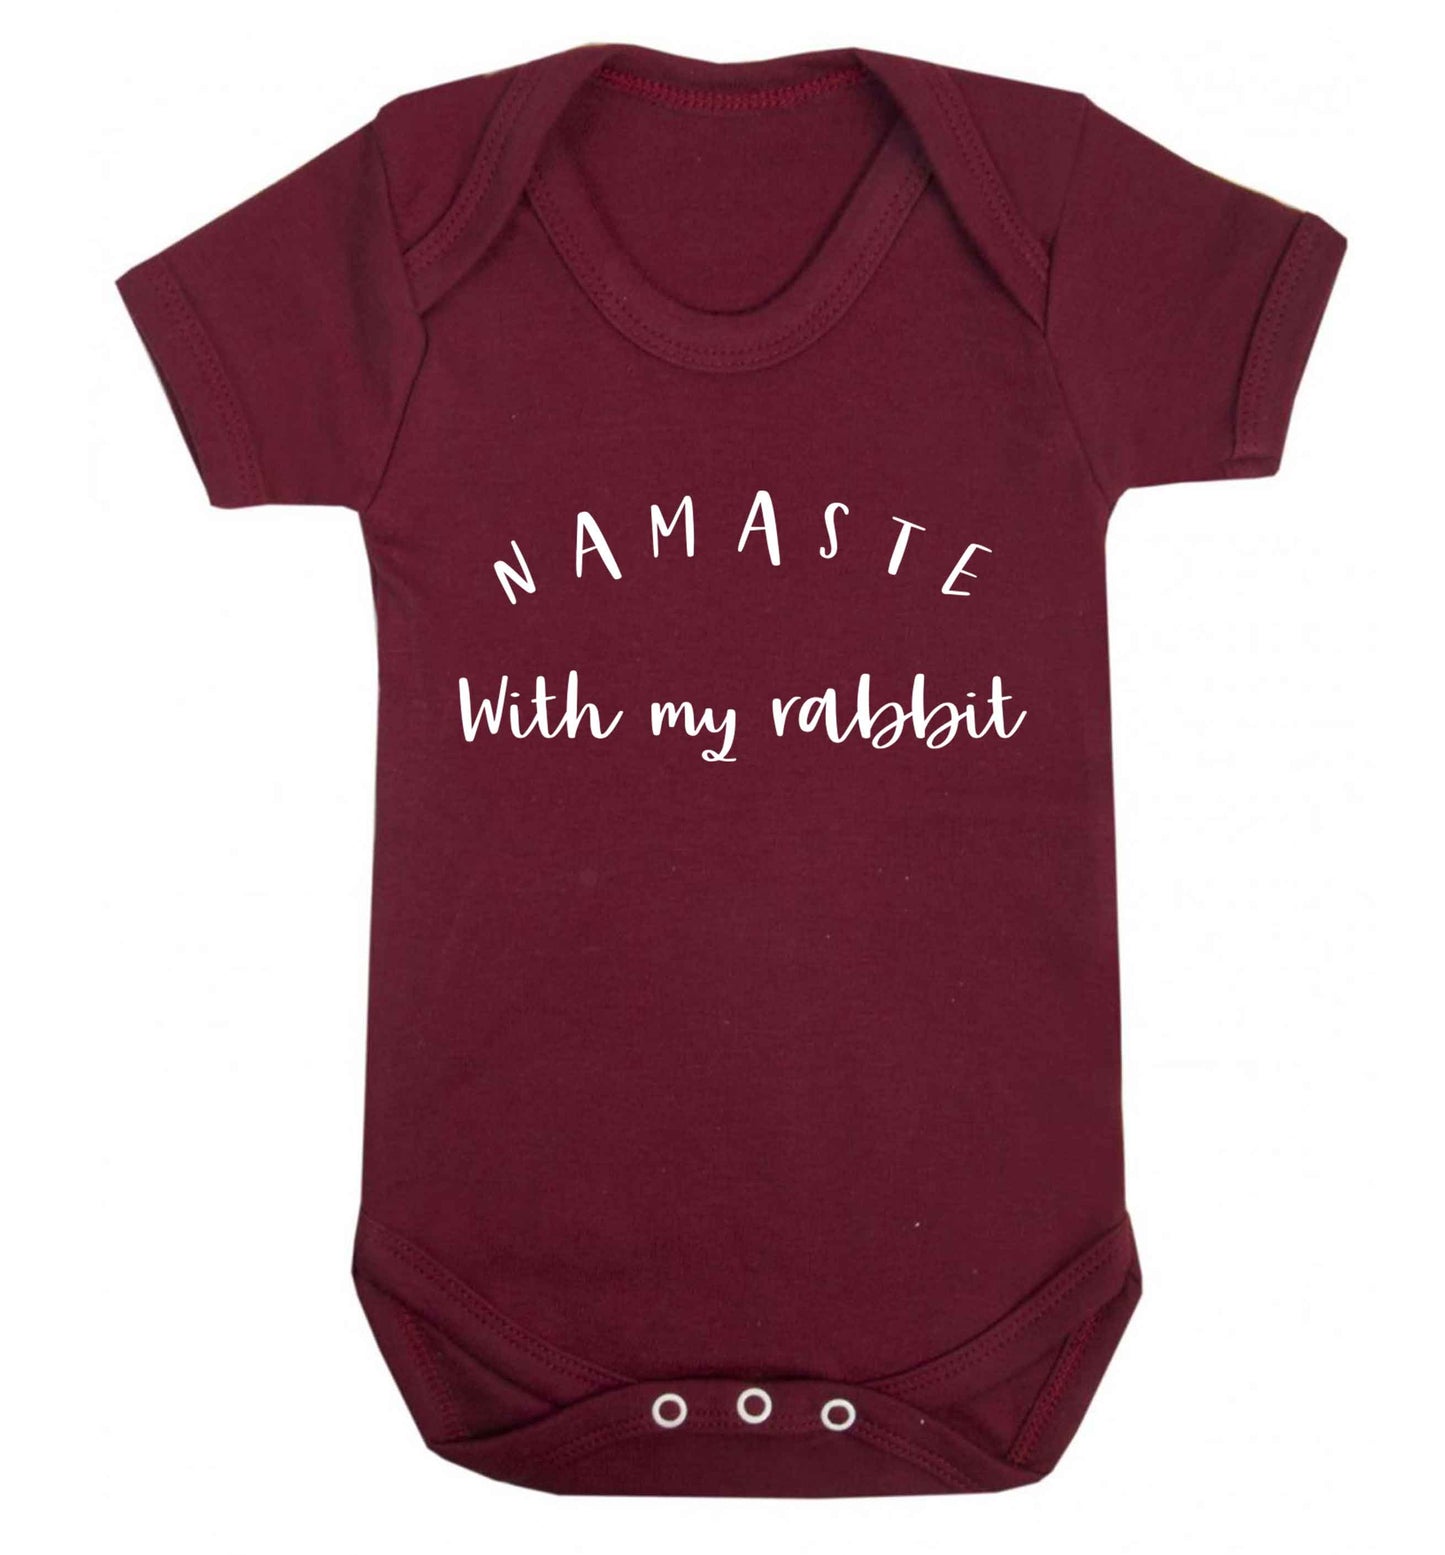 Namaste with my rabbit Baby Vest maroon 18-24 months